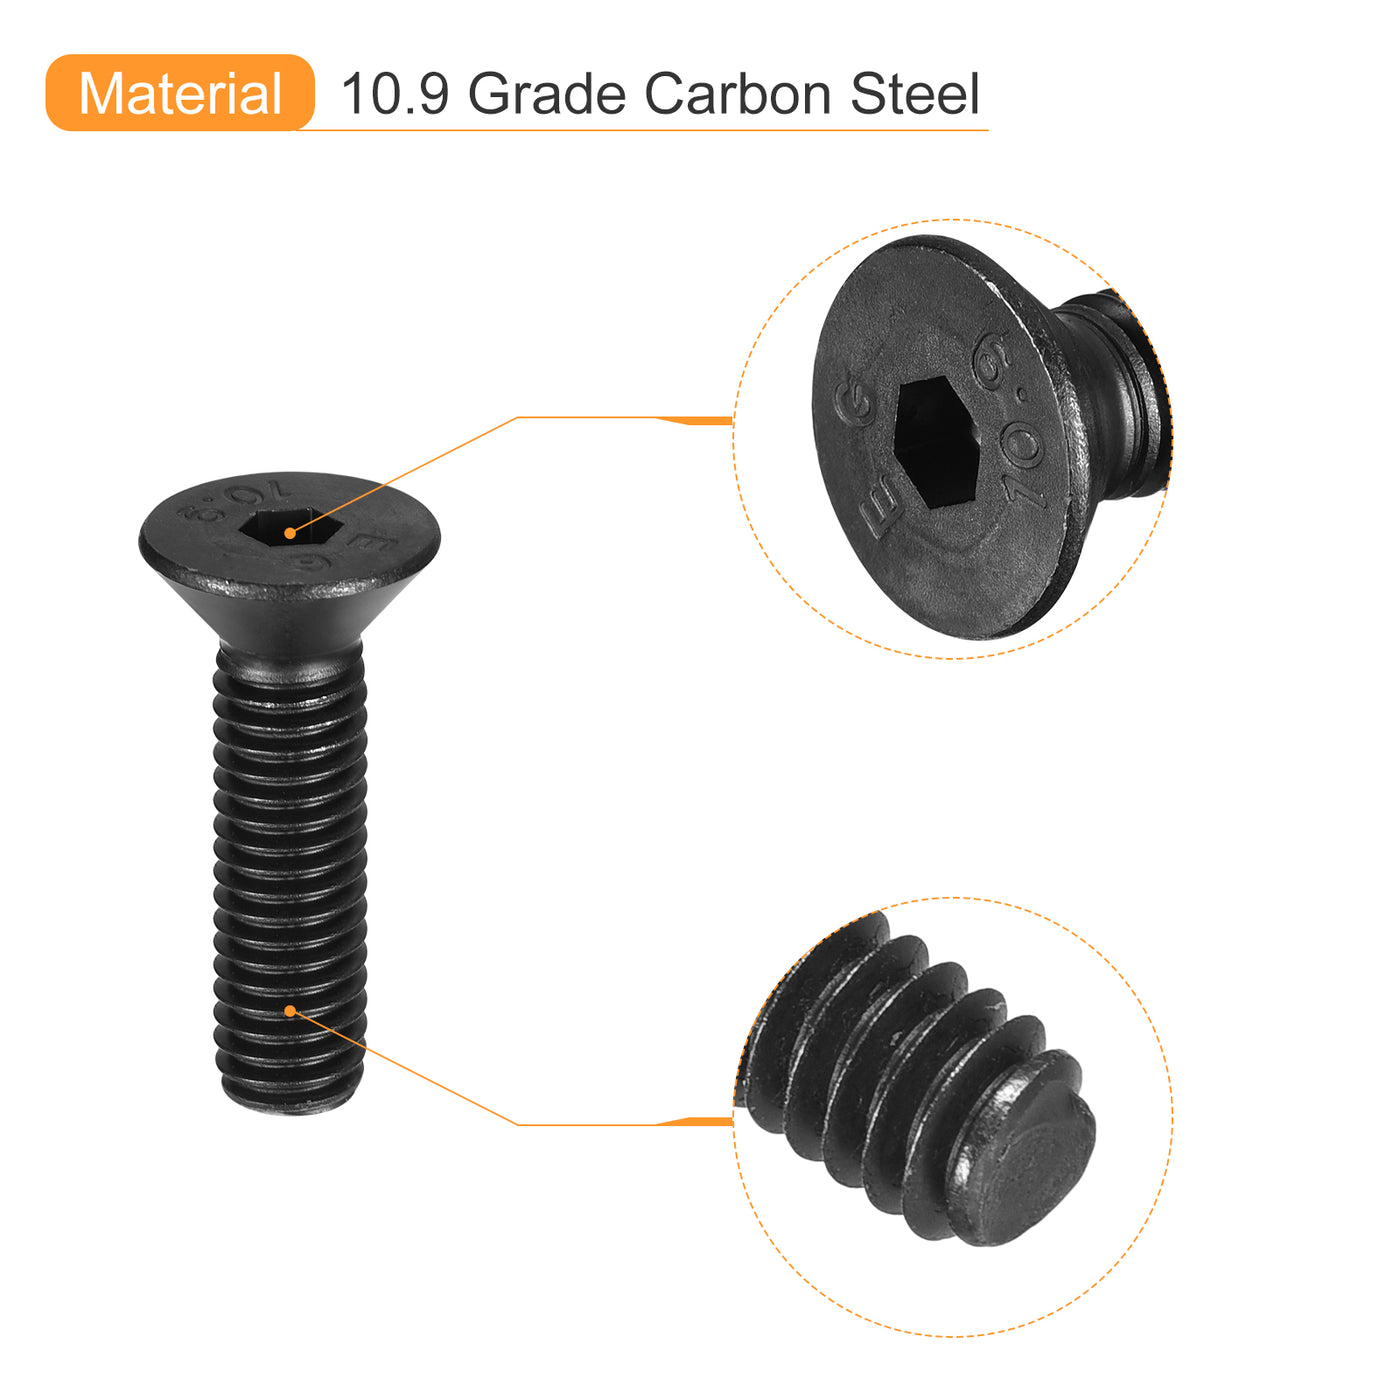 uxcell Uxcell 3/8-16x1-1/2" Flat Head Socket Cap Screws, 10.9 Grade Carbon Steel, 20PCS